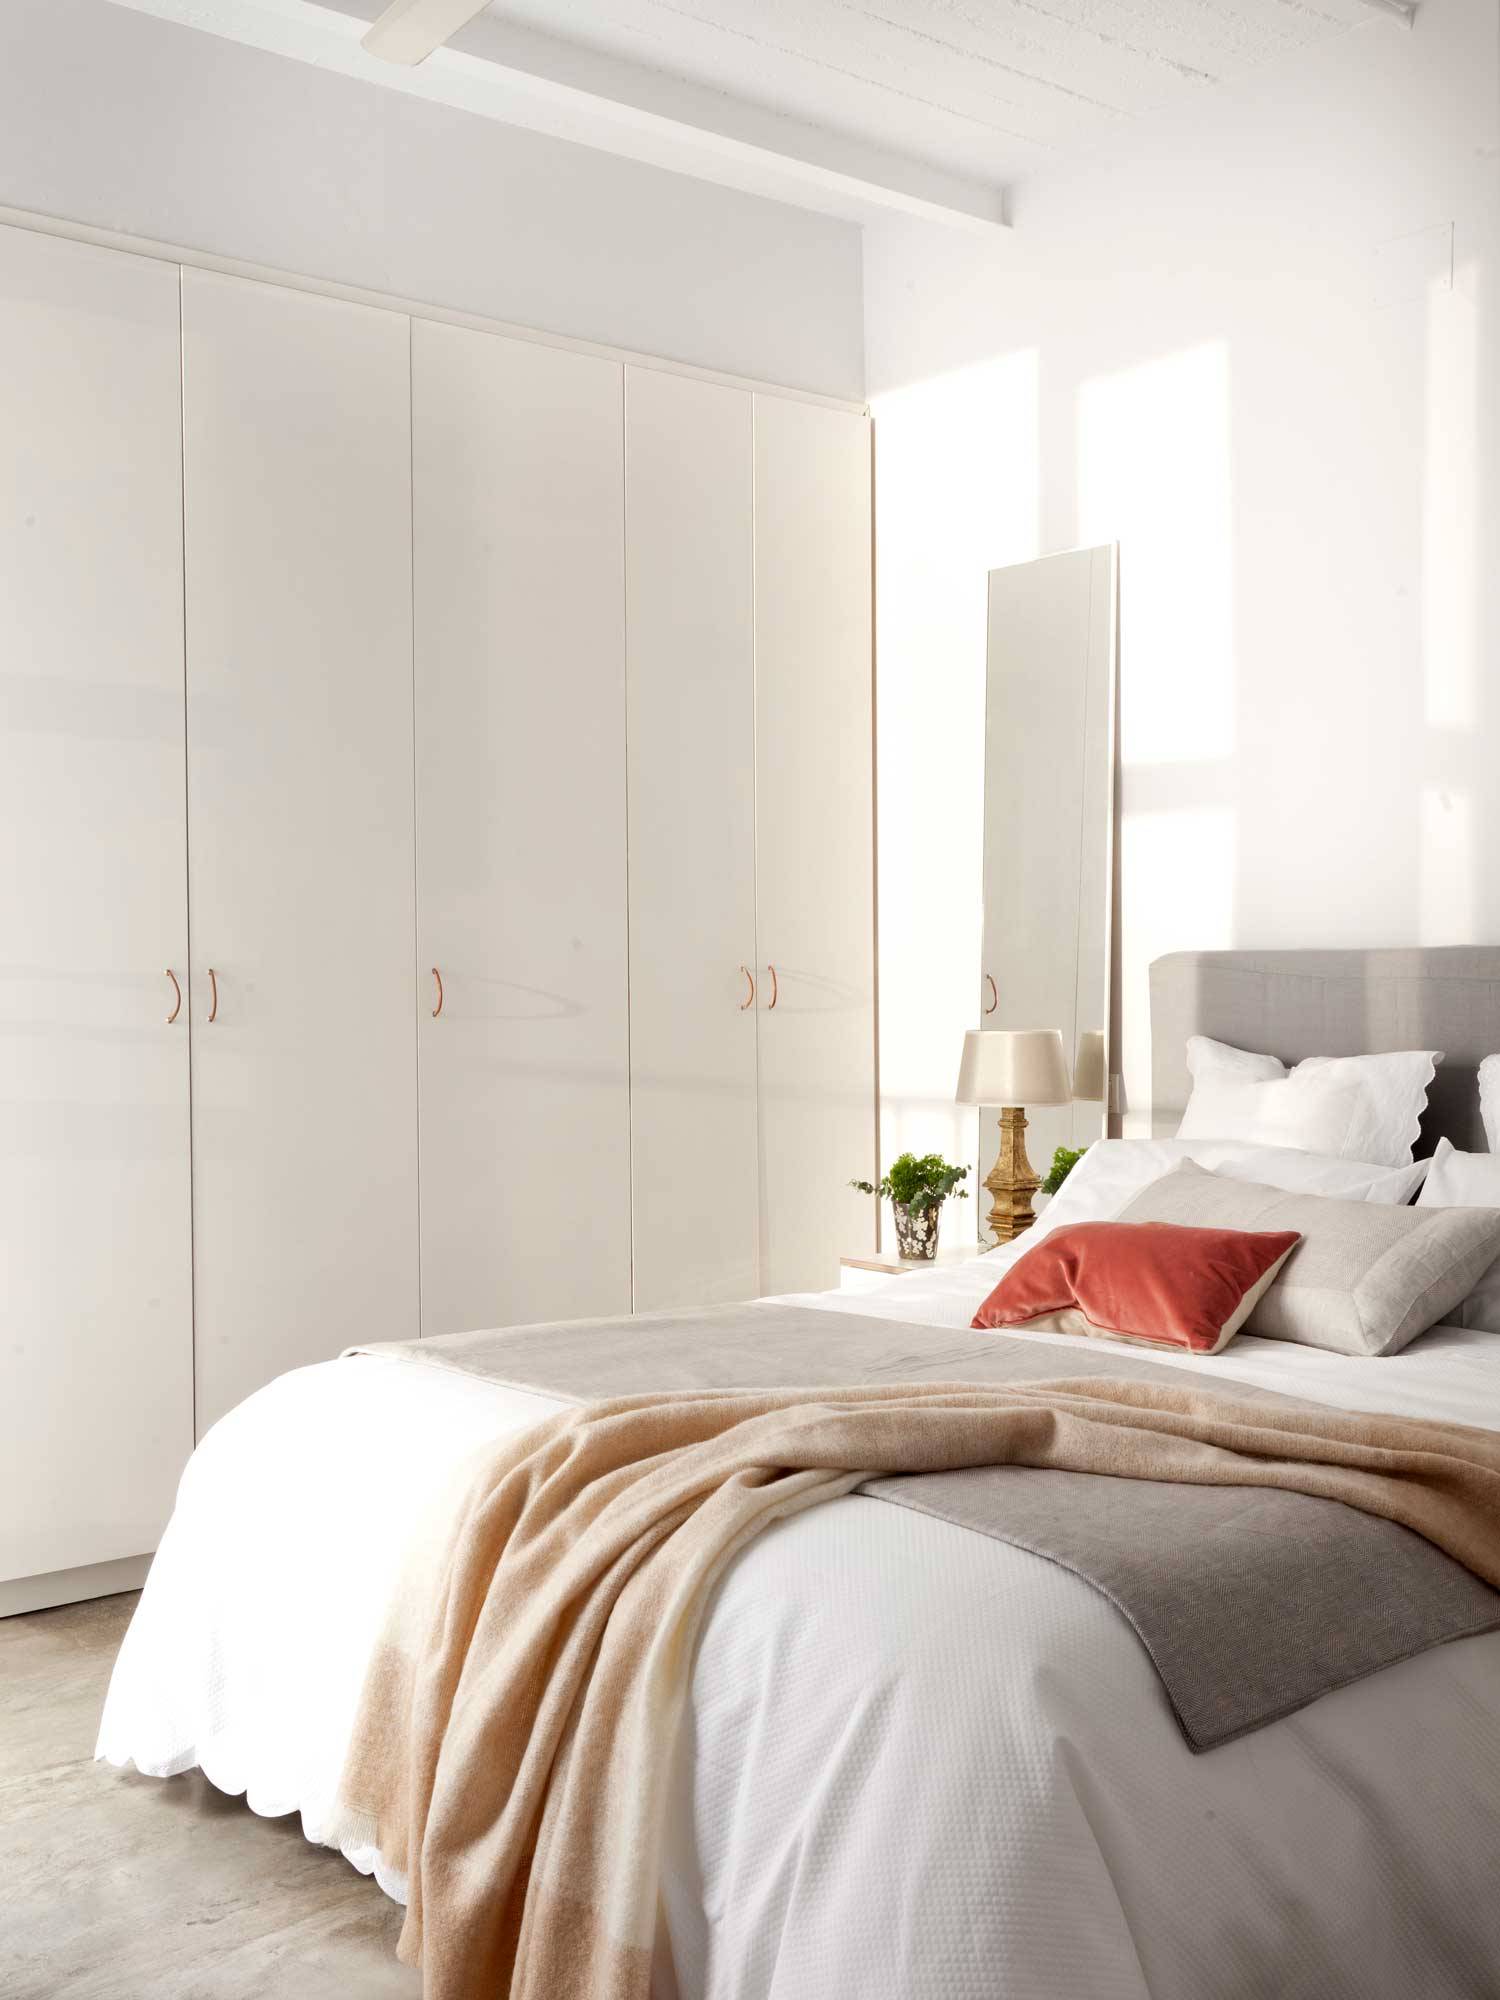 Dormitorio moderno con frentes de armario en blanco. 